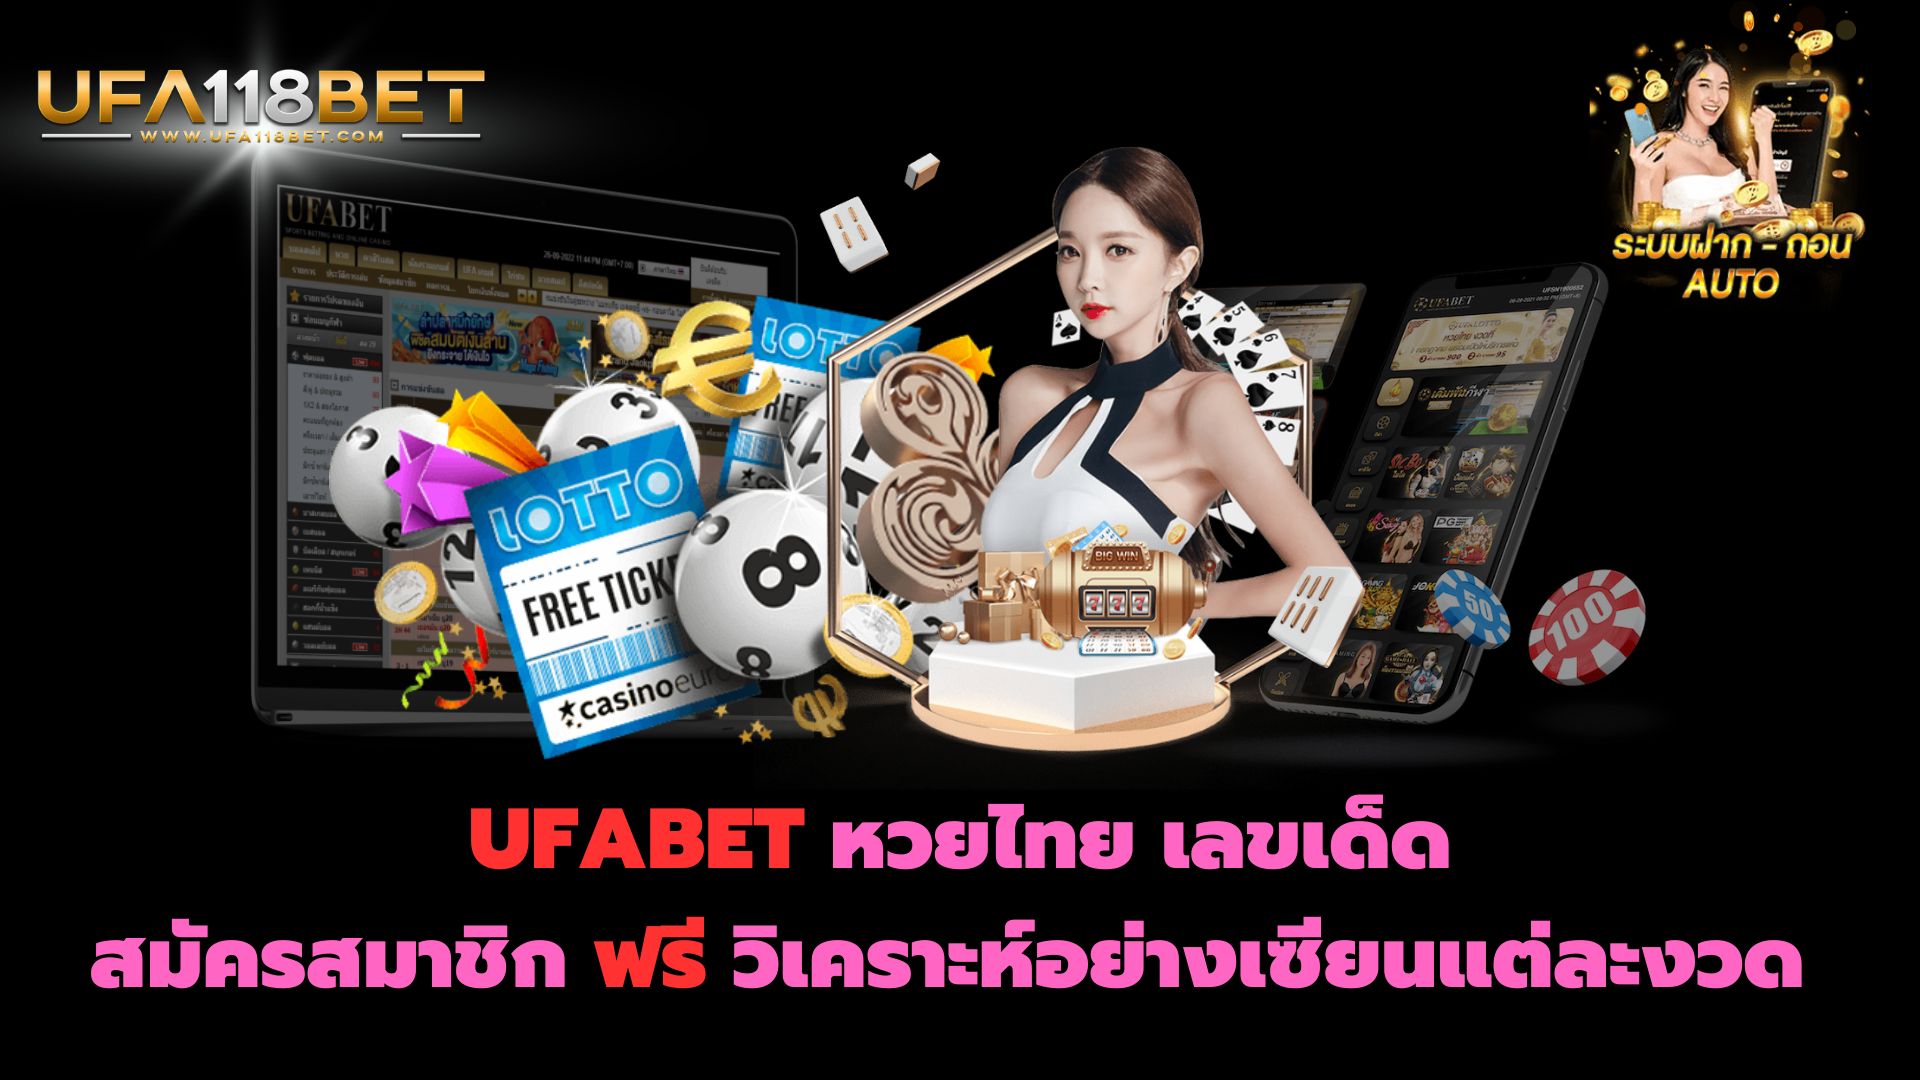 UFABET หวยไทย เลขเด็ด สมัครสมาชิก ฟรี วิเคราะห์อย่างเซียนแต่ละงวด post thumbnail image